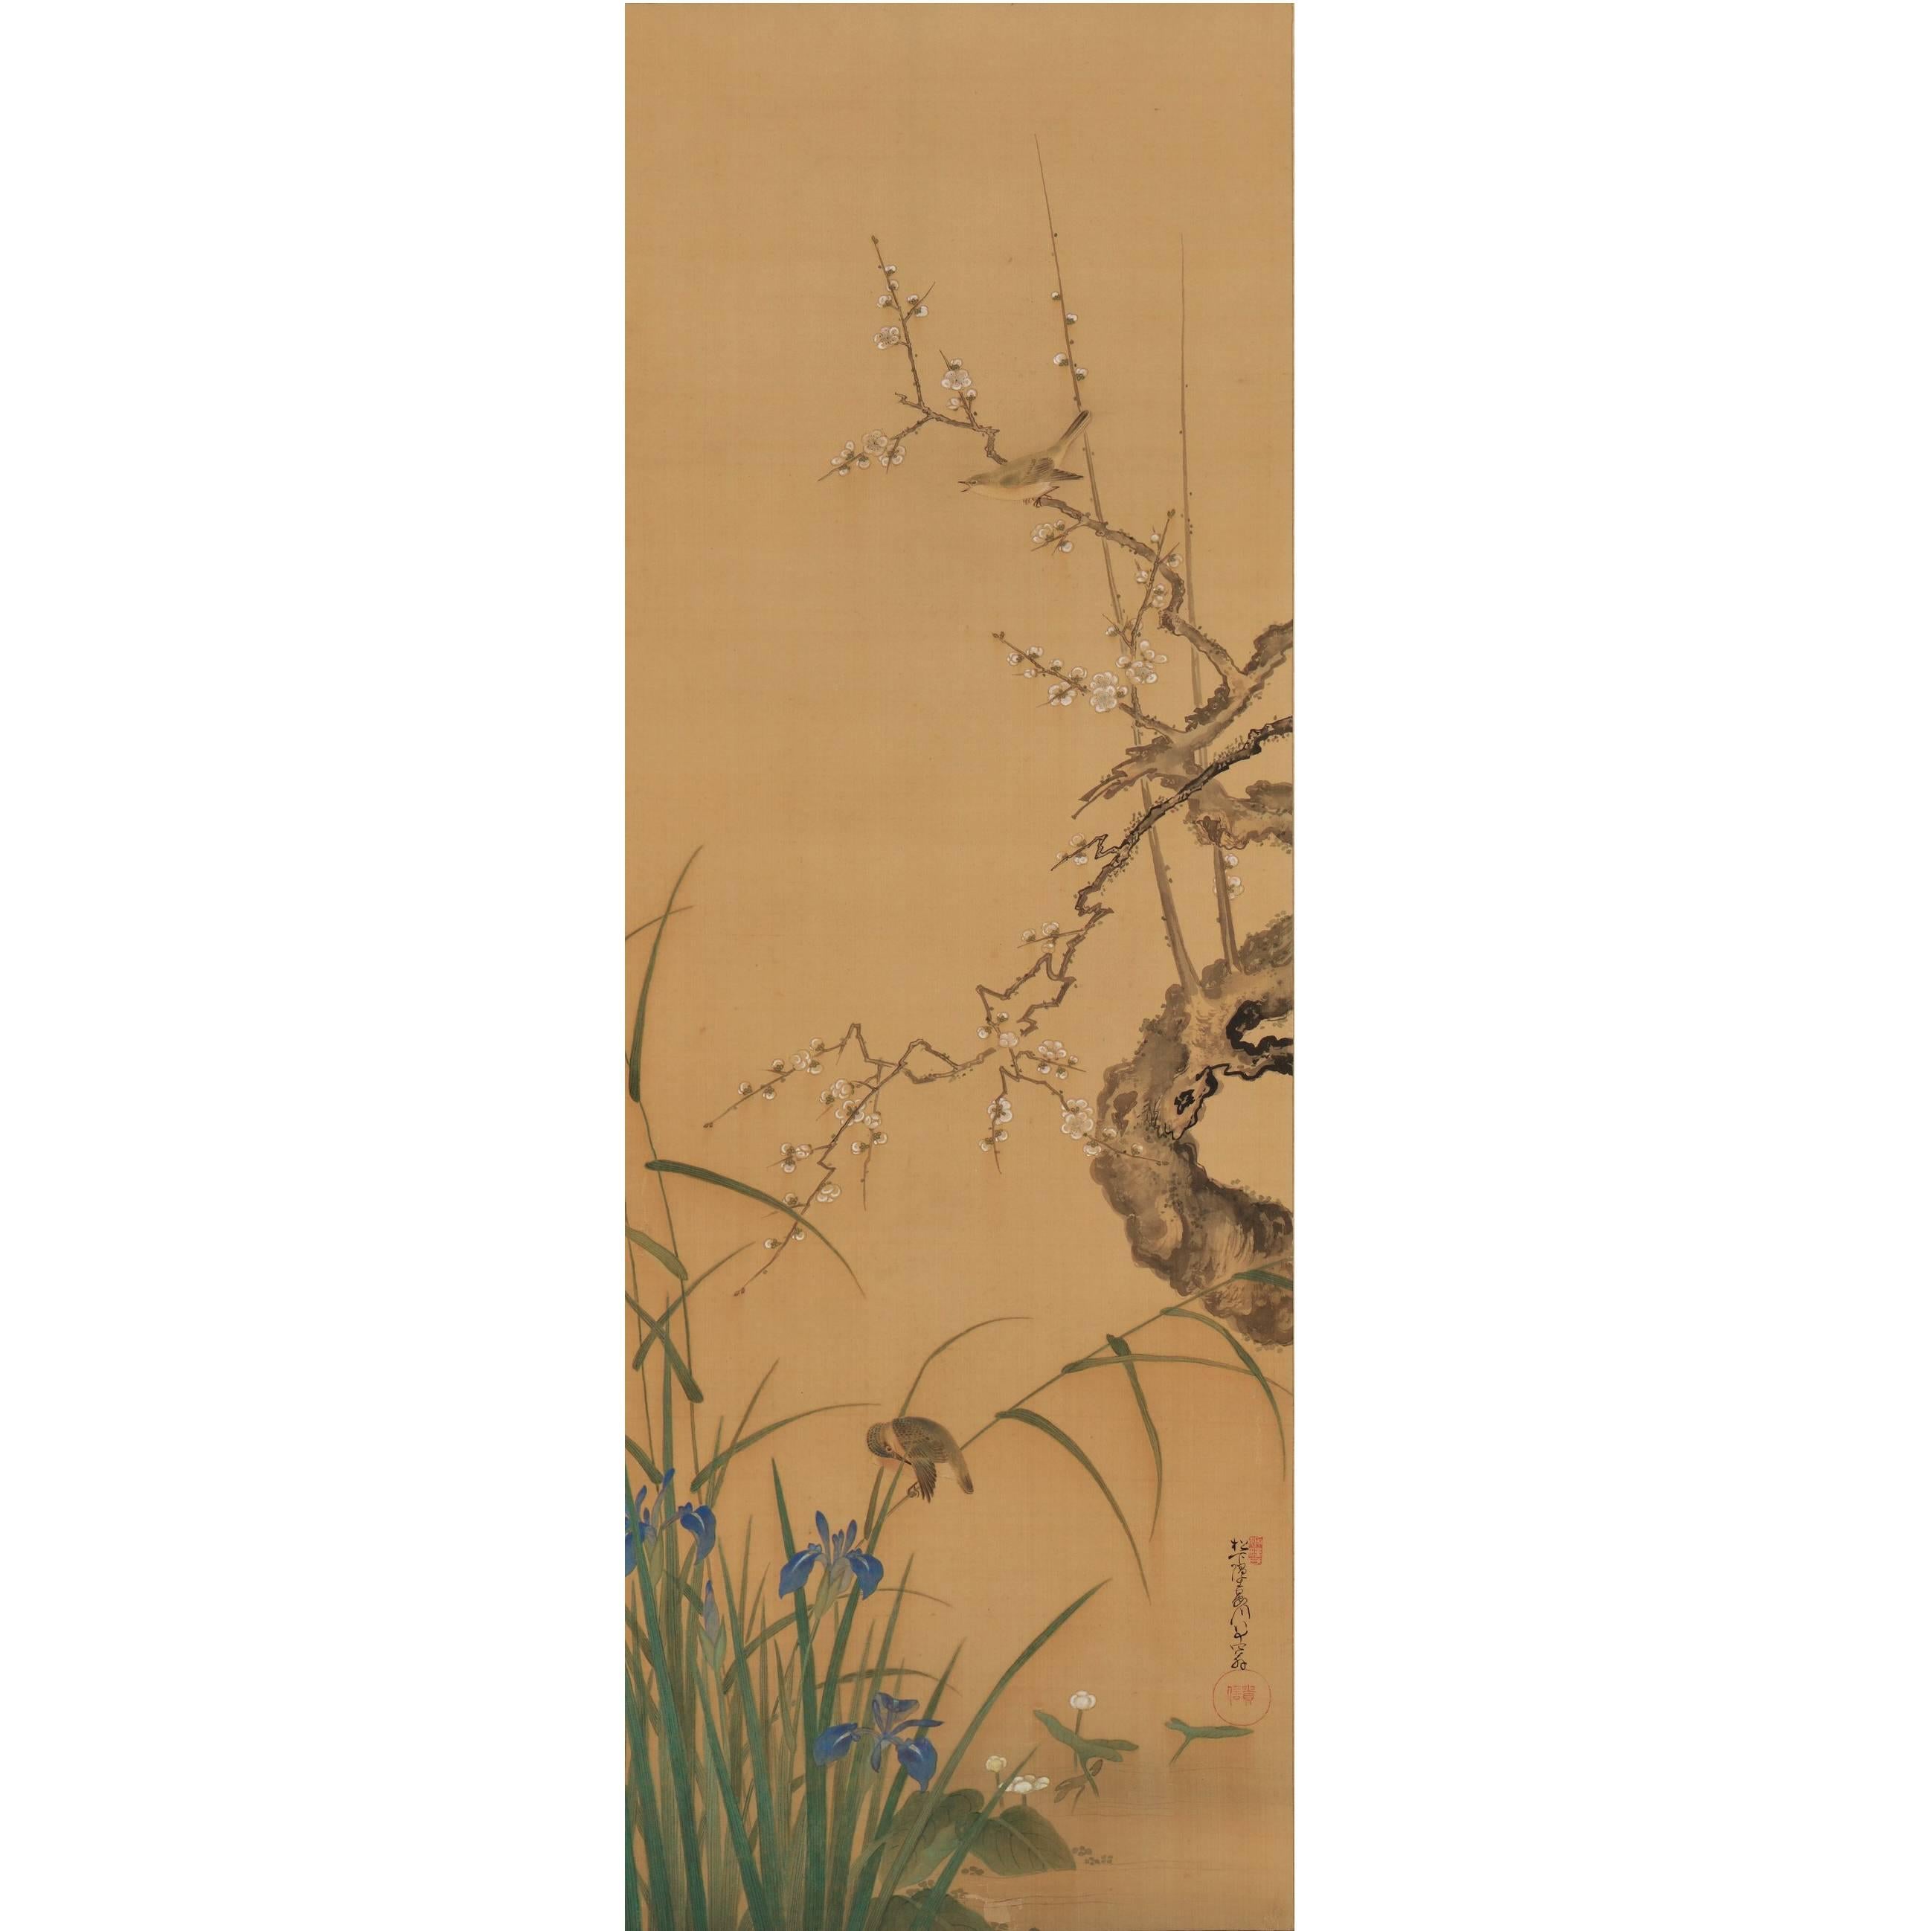 Kano Ansen Takanobu, Flowers and Birds, Japanese Scroll Painting